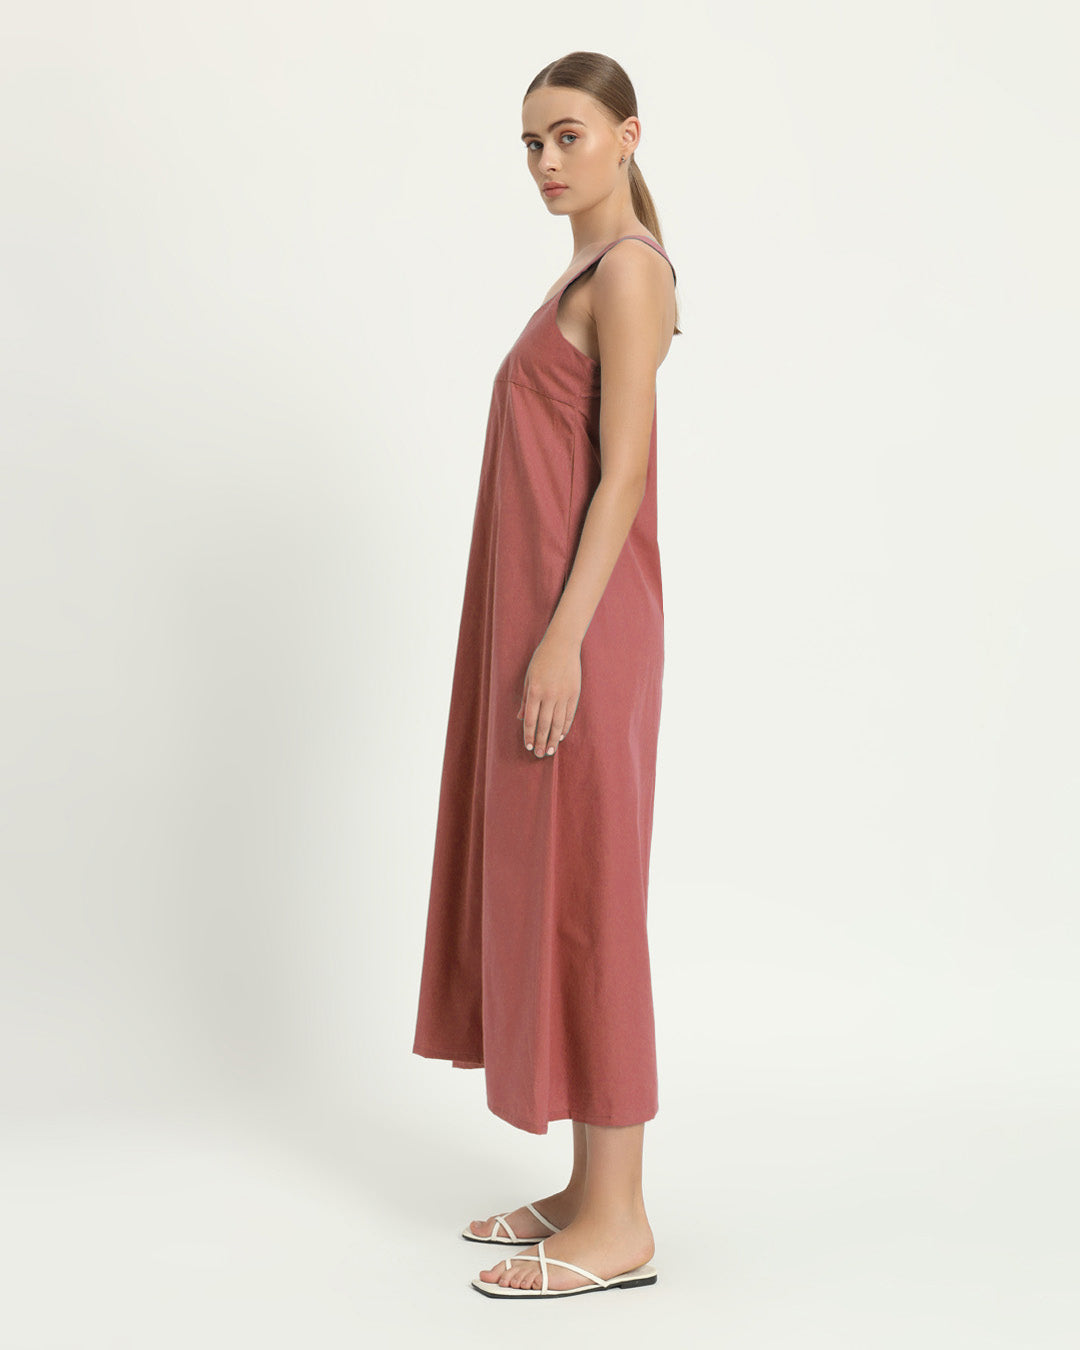 The Magdala Ivory Pink Cotton Dress